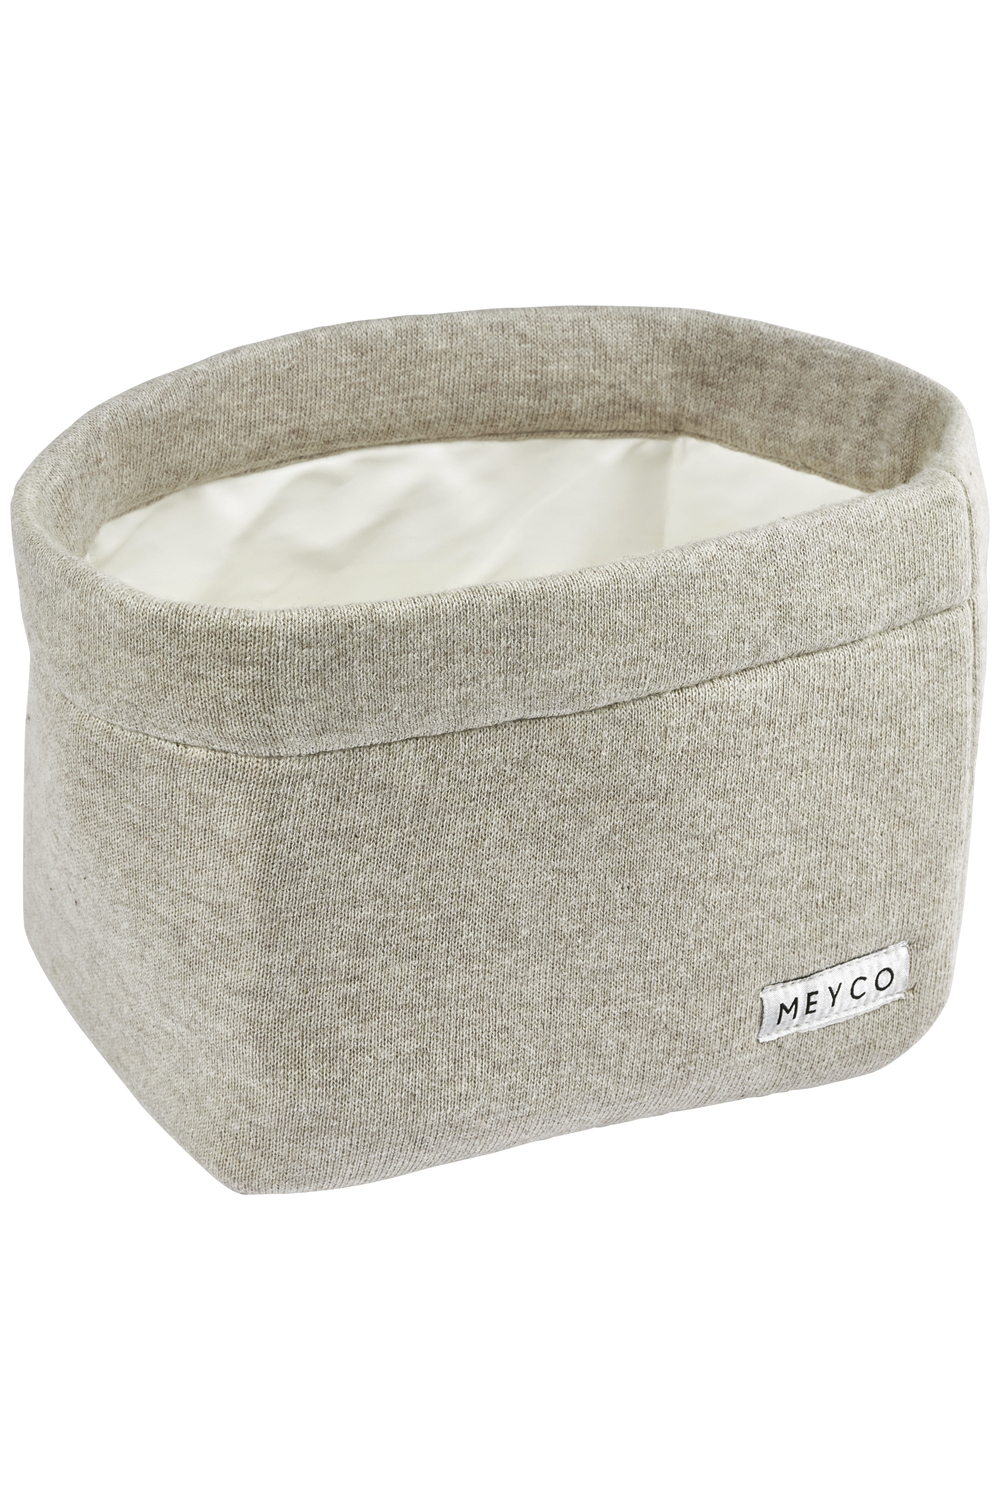 Commodemand Medium Knit Basic - Sand Melange - 26x19xh16cm